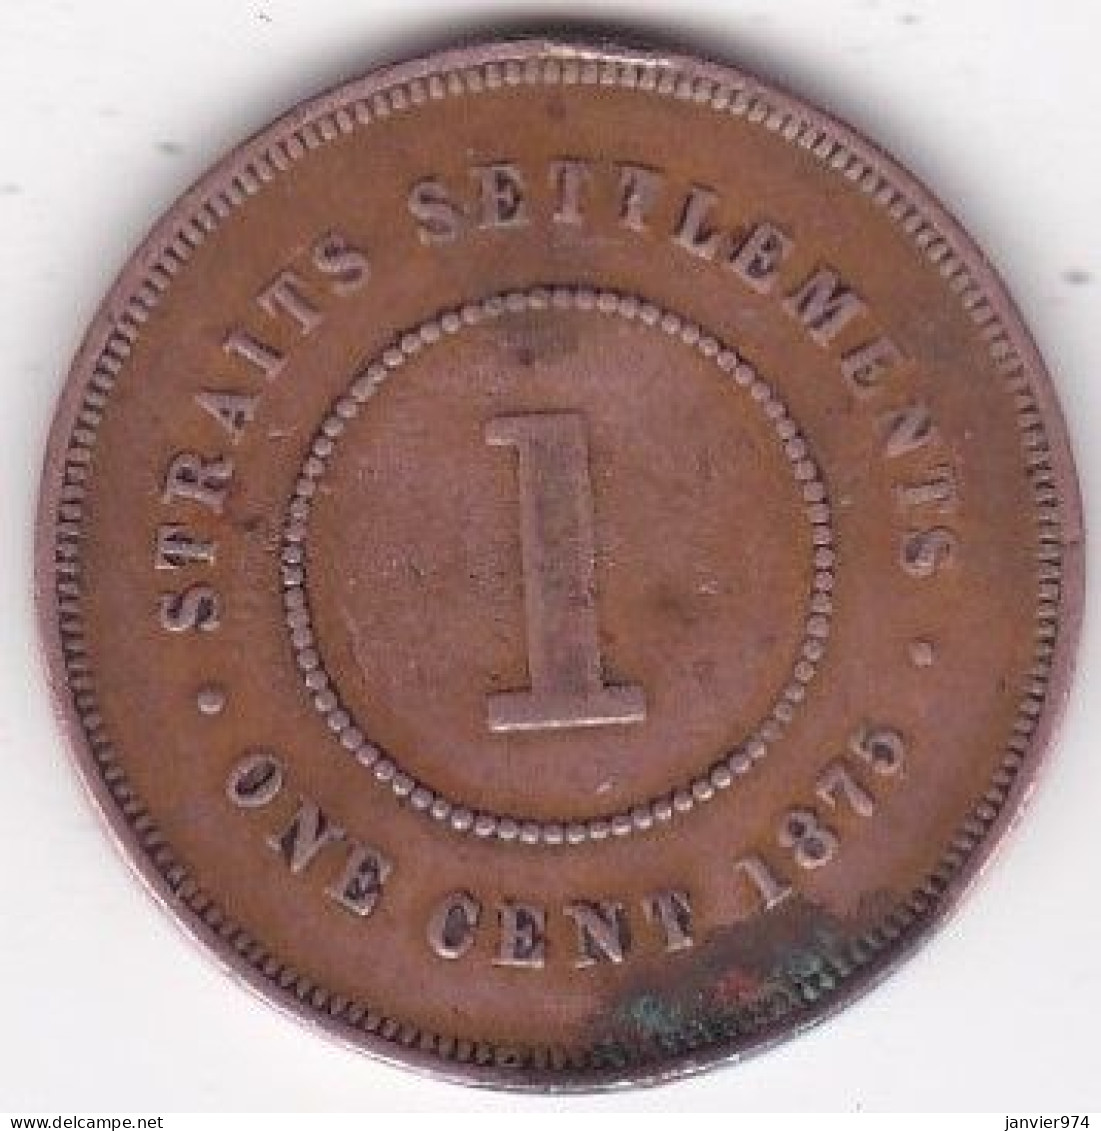 Straits Settlements 1 Cent 1875 Victoria, En Bronze, KM# 9 - Malaysia